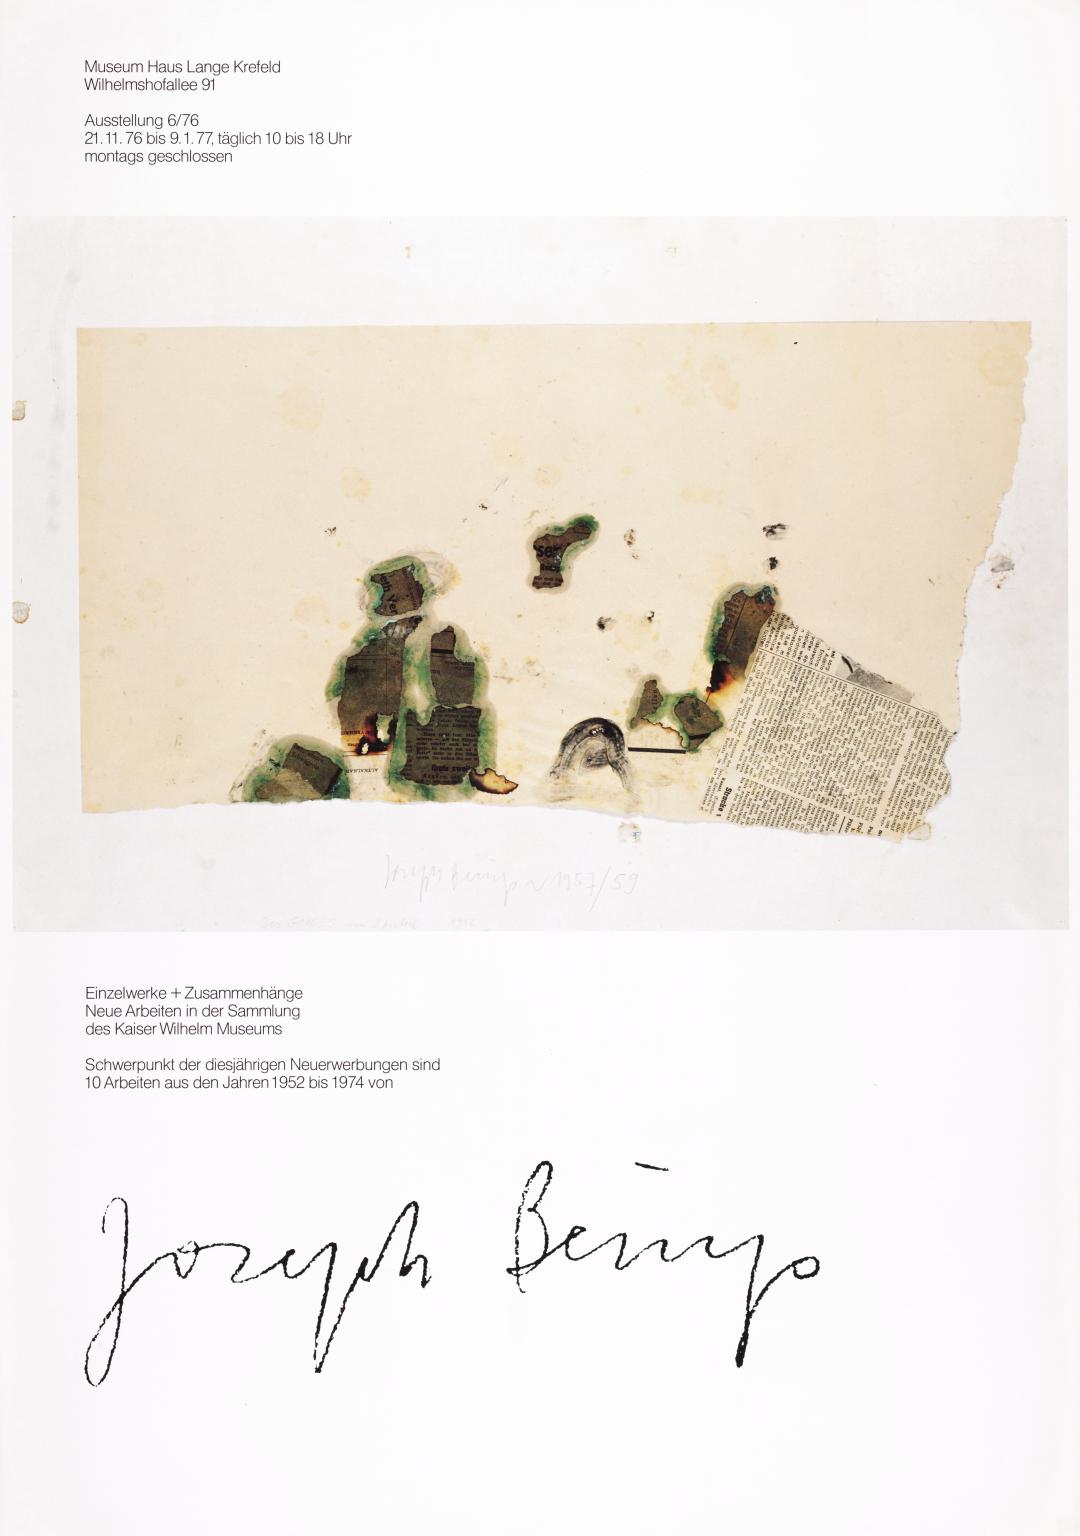 Joseph Beuys: Museum Haus Lange Krefeld. 1977